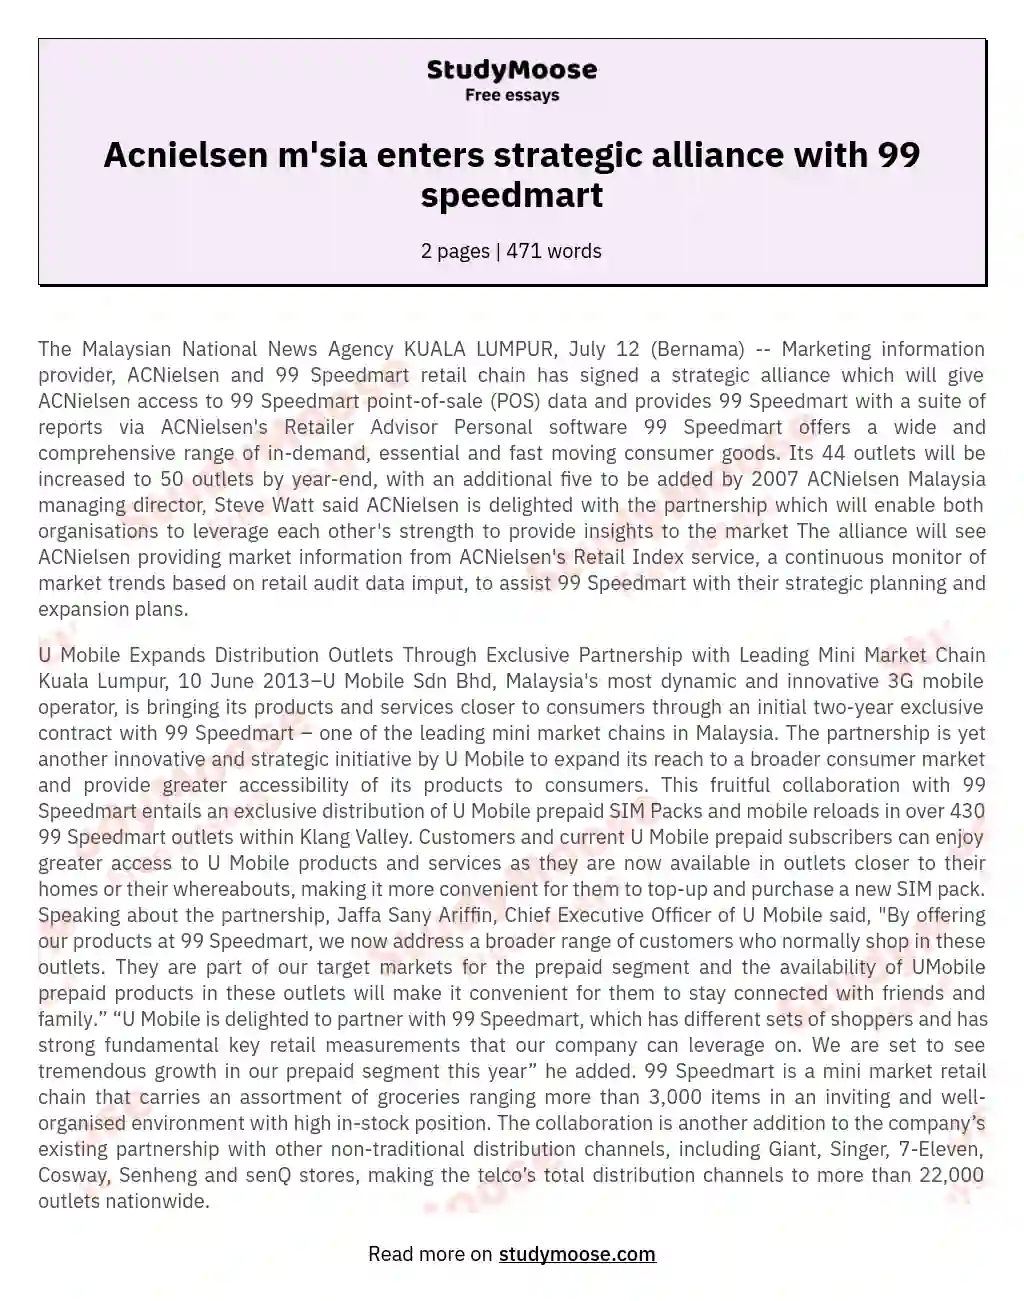 Acnielsen m'sia enters strategic alliance with 99 speedmart